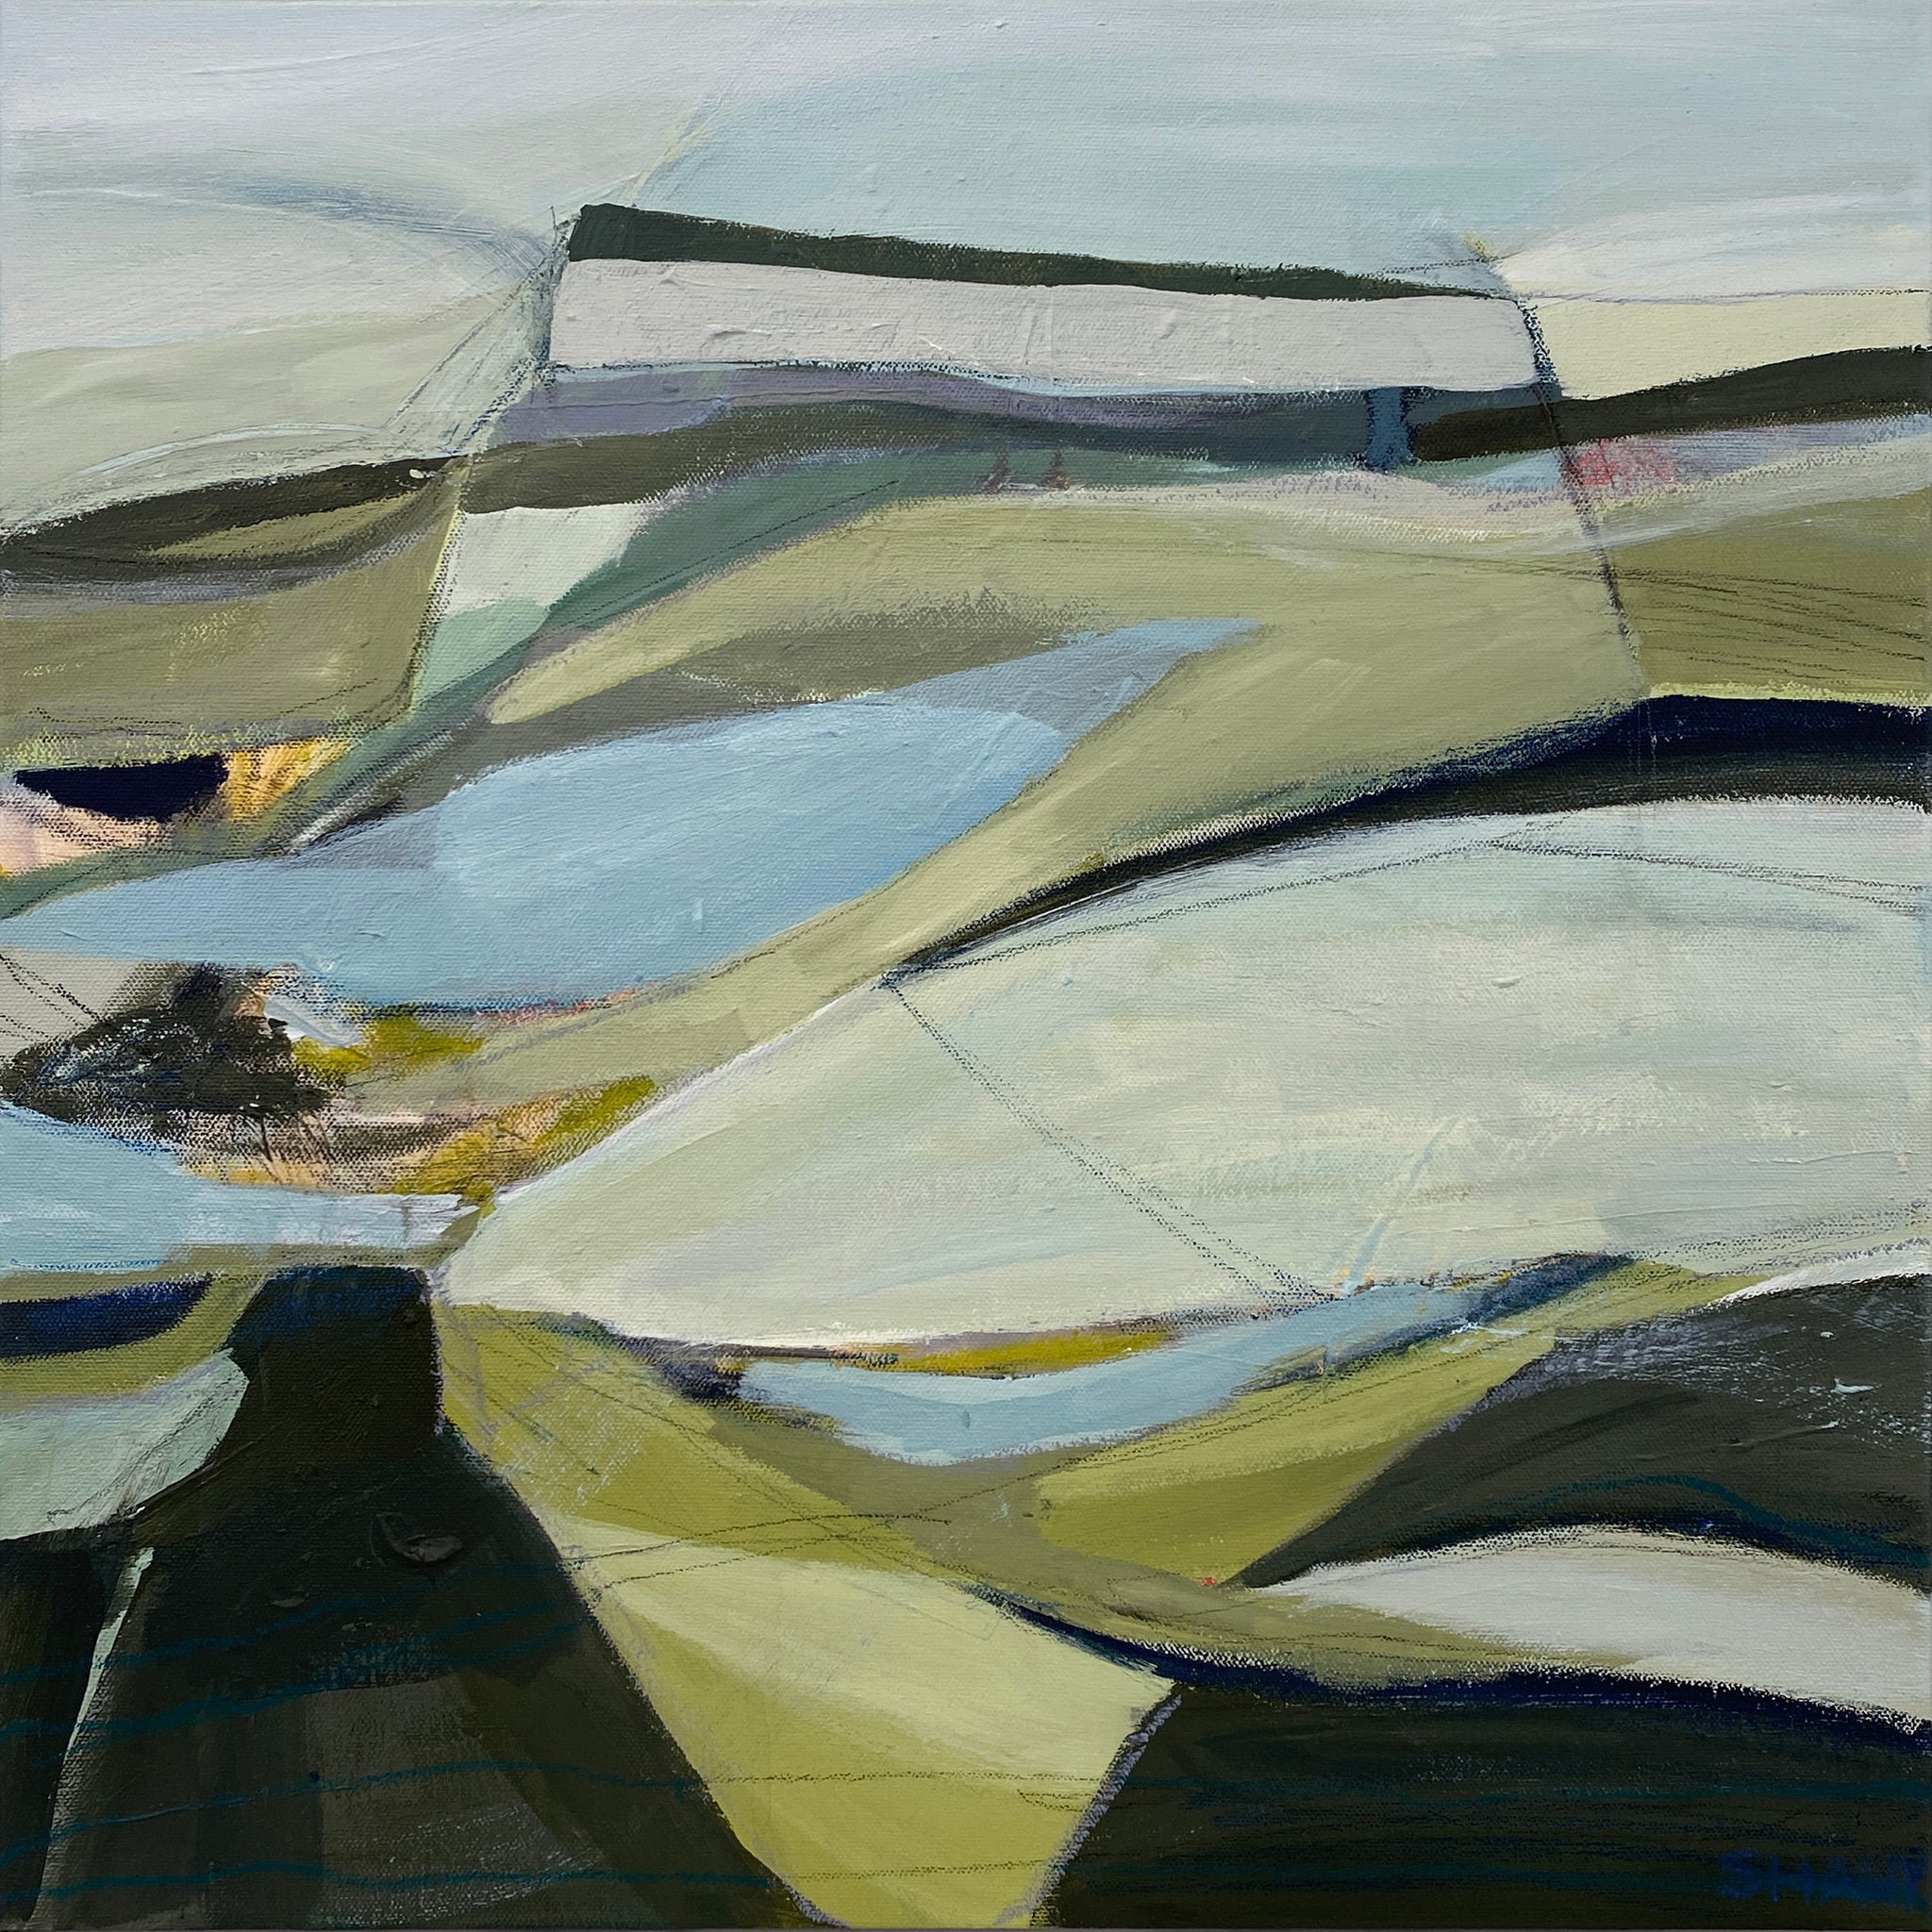 Abstract Landscape - Translation of "Landslide" (Fleetwood Mac) - Mixed media on canvas